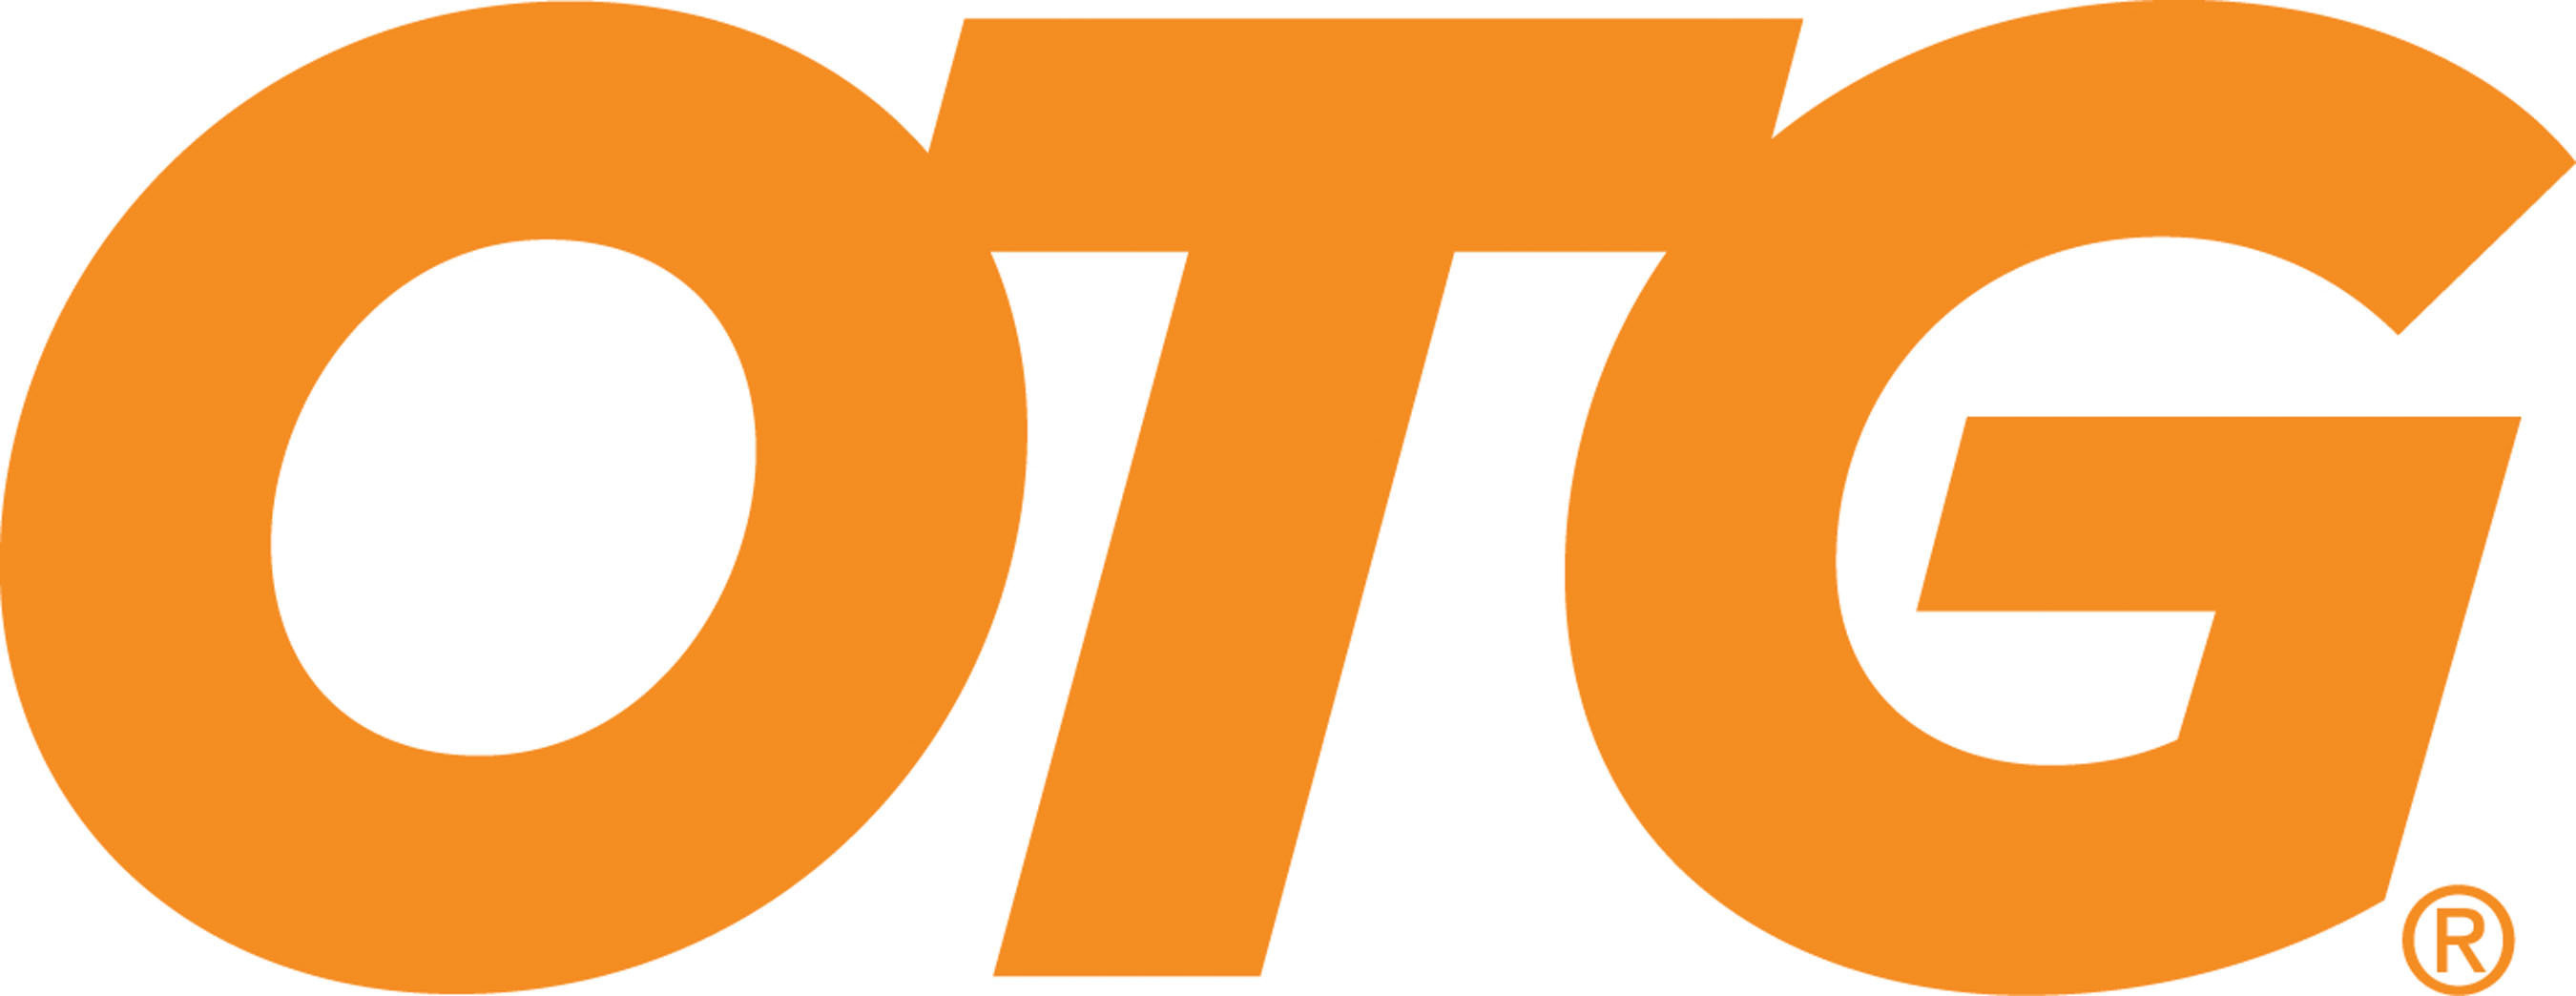 OTG Logo. (PRNewsFoto/OTG) (PRNewsFoto/OTG)